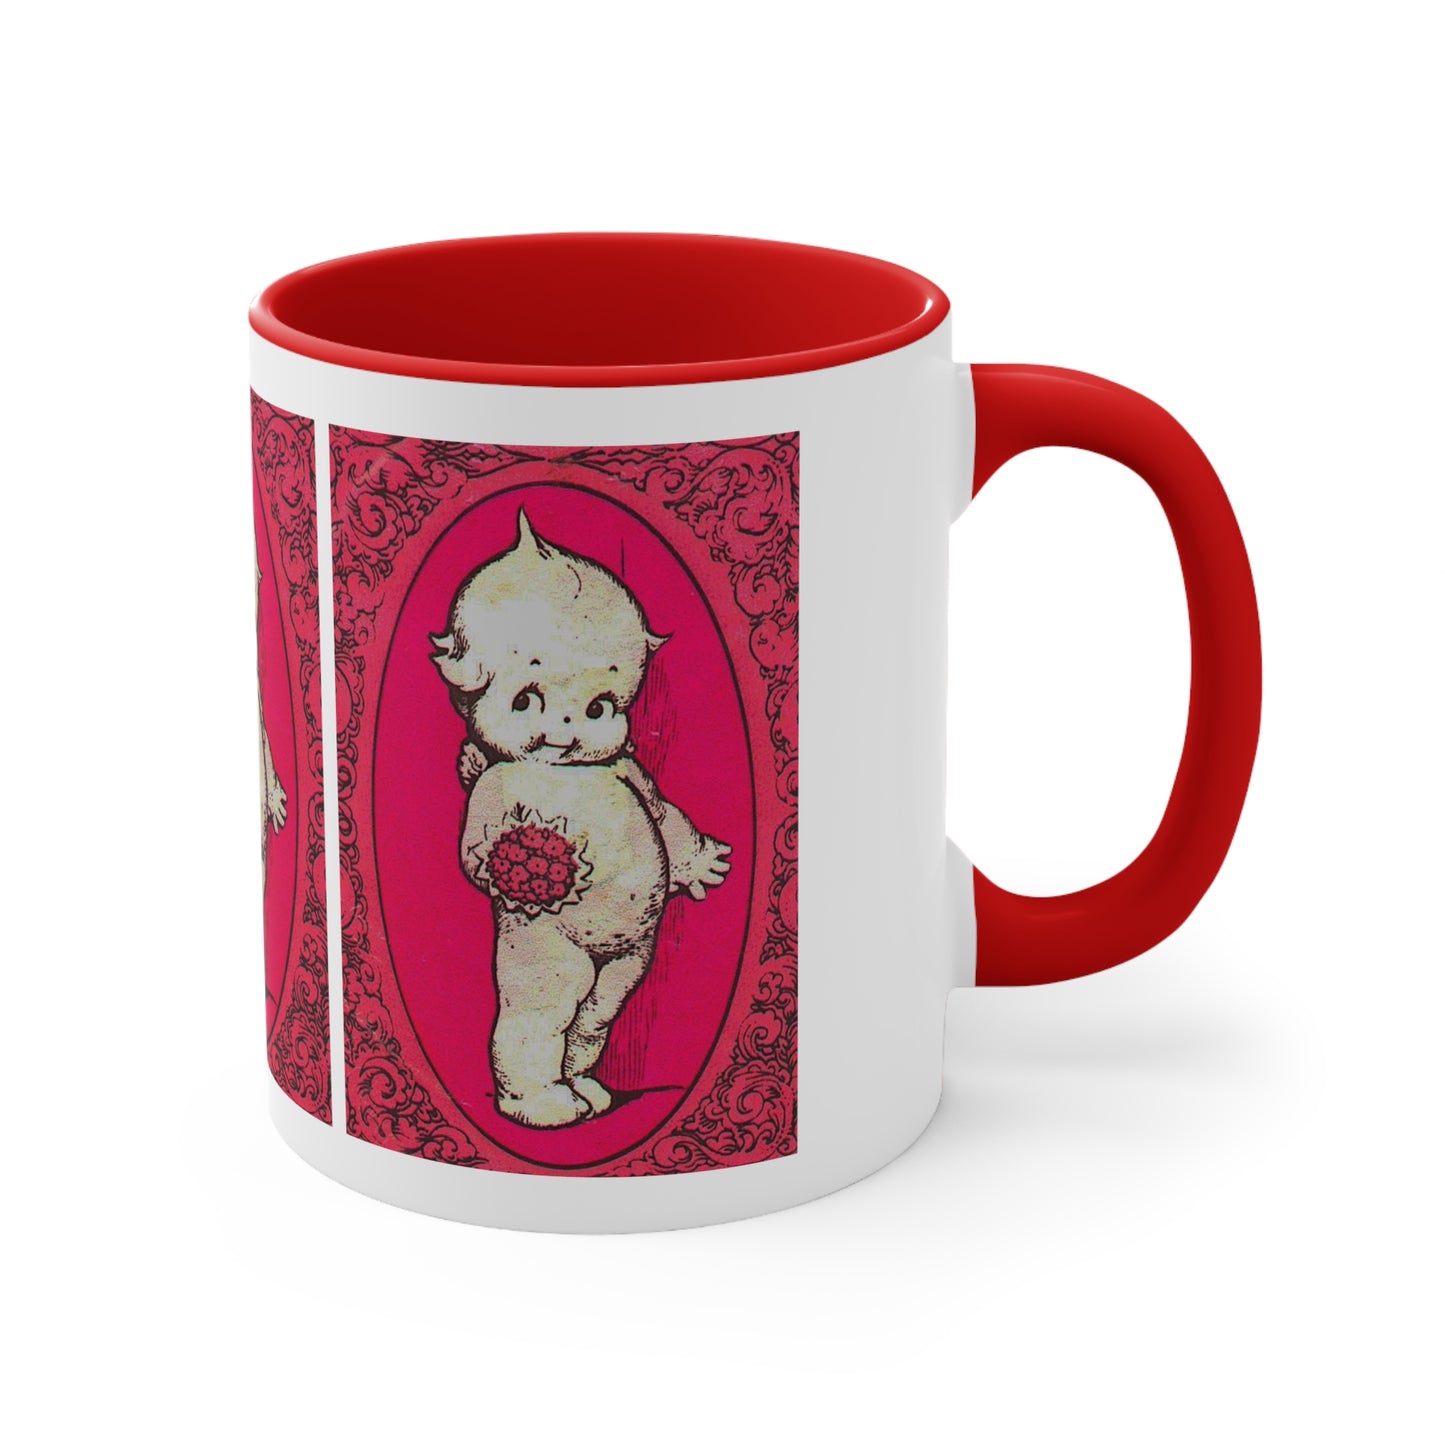 Cupid's Cuddles: Valentine's Kewpie Doll Love Mug